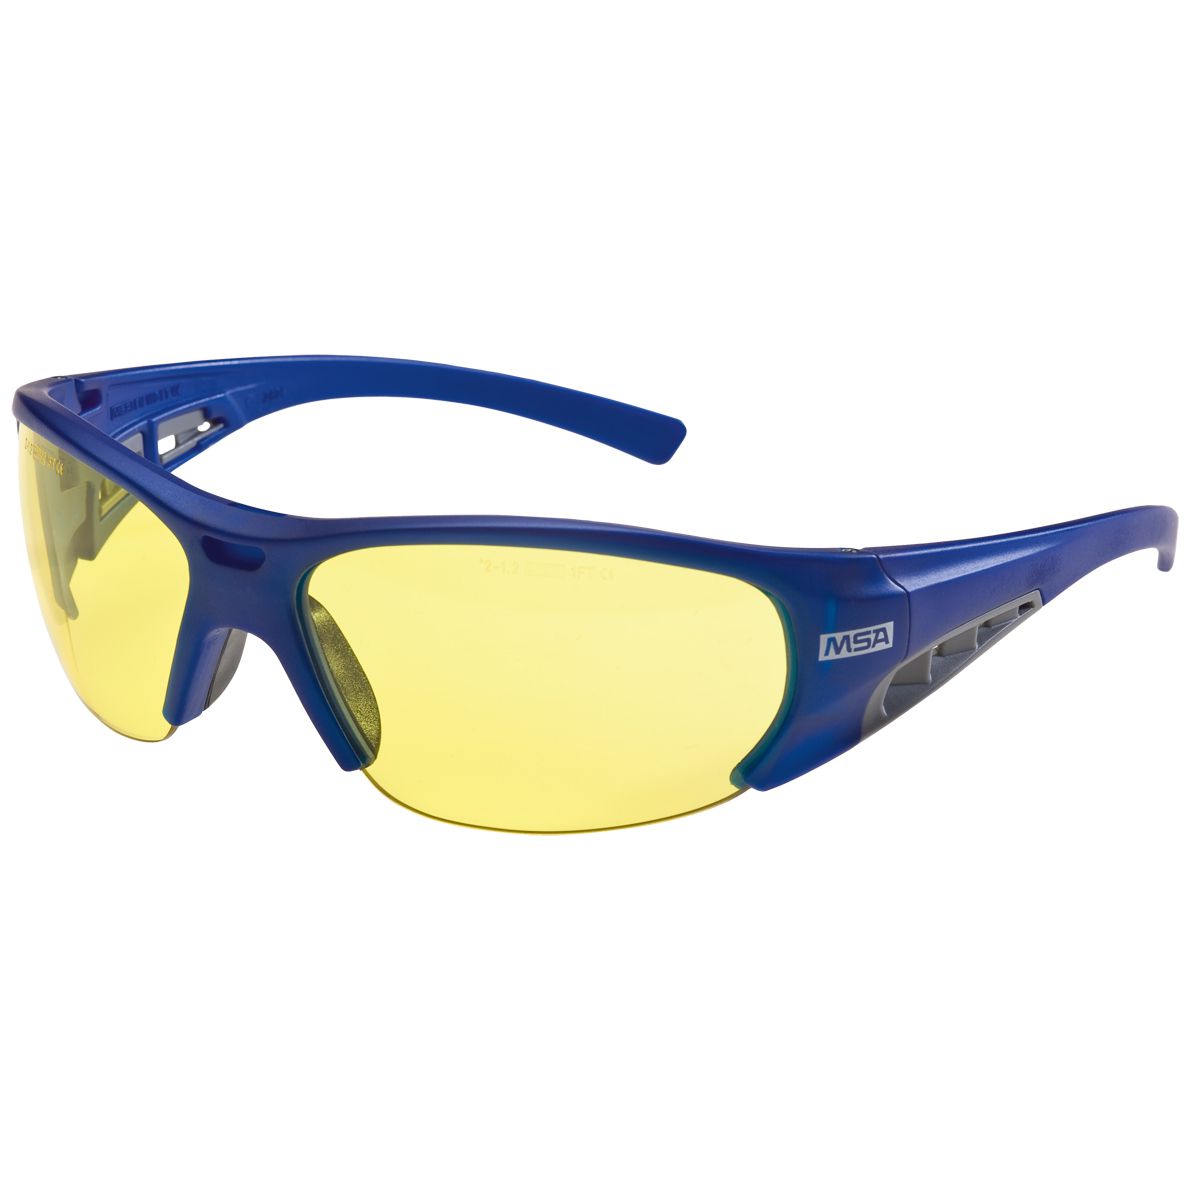 MSA Alternator safety glasses - scratch & fog resistant thanks to Sightgard coating - EN 166/170 - Blue/Yellow